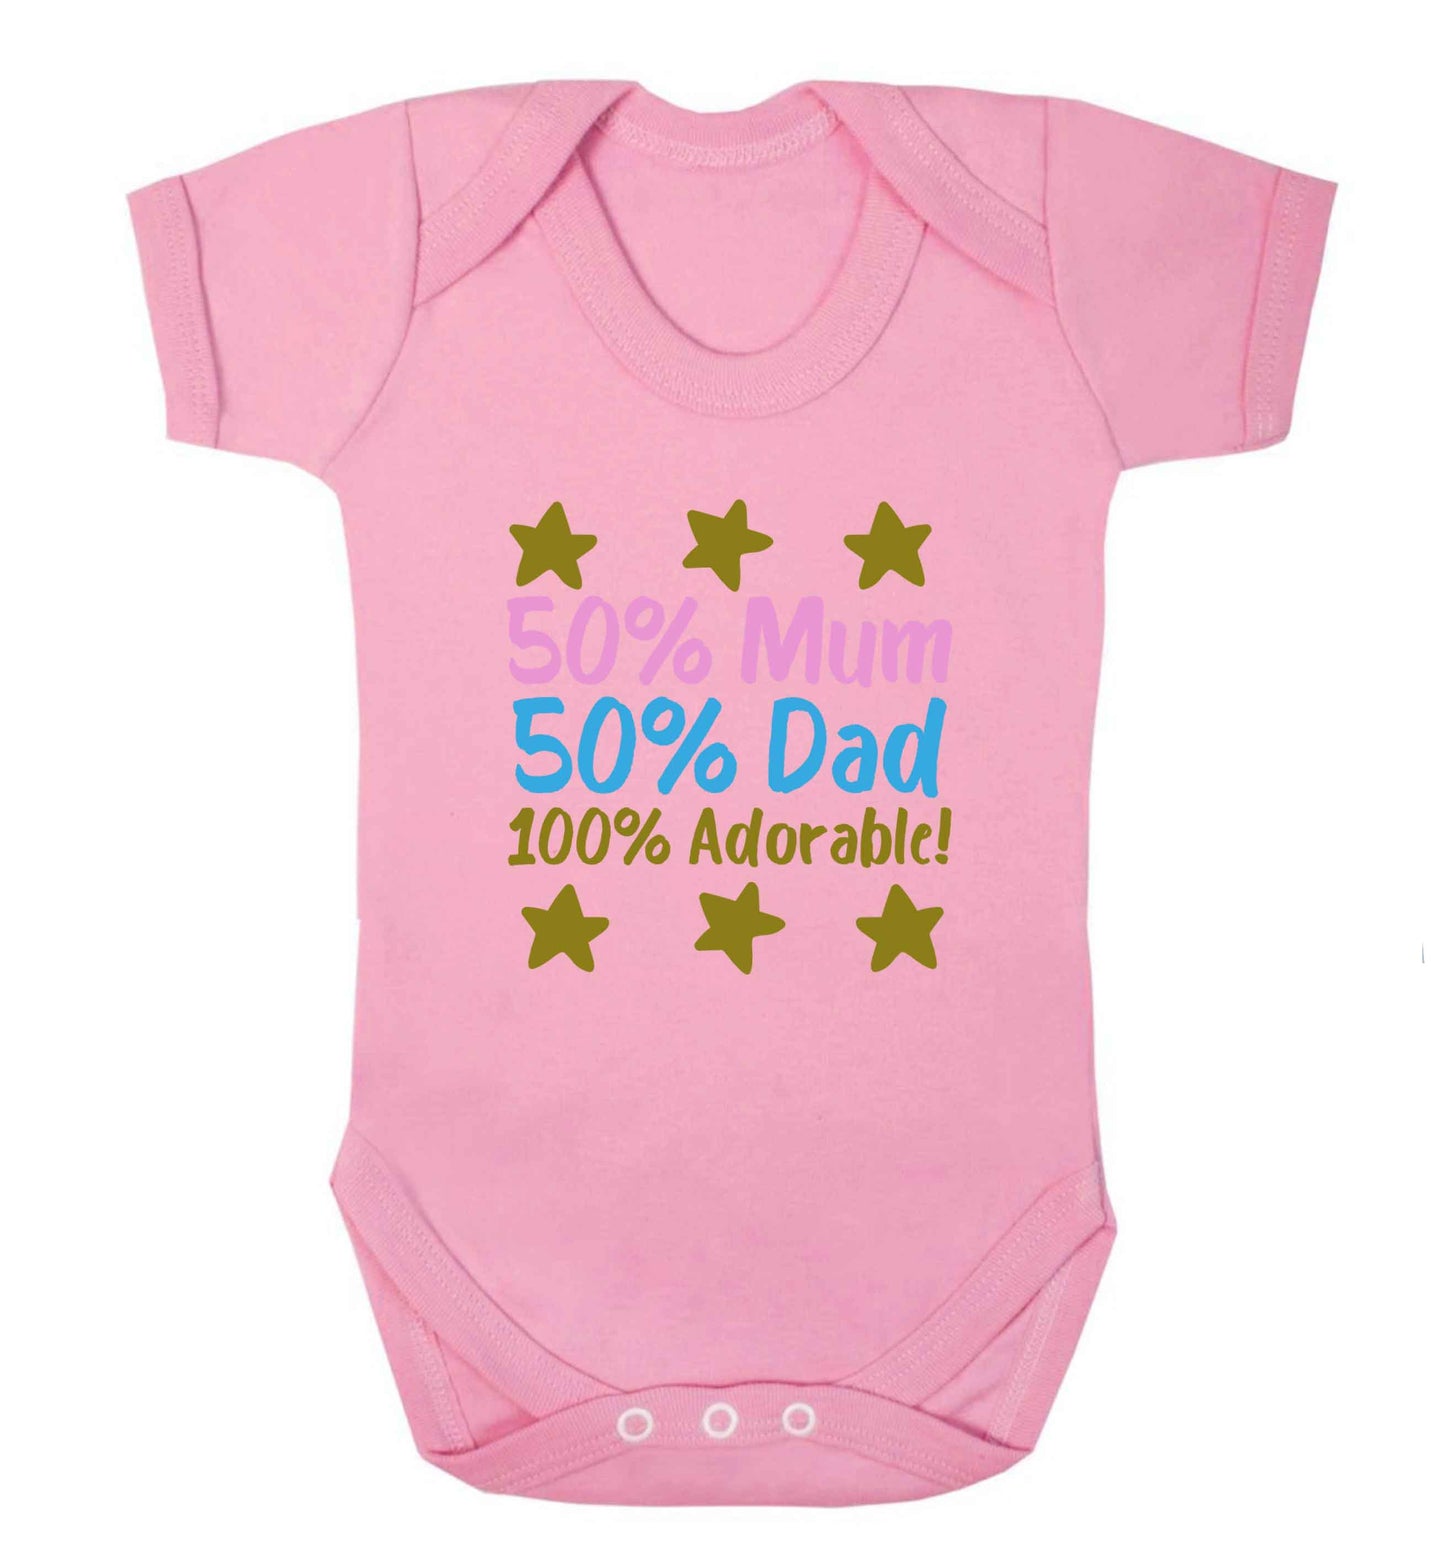 50% mum 50% dad 100% adorable baby vest pale pink 18-24 months